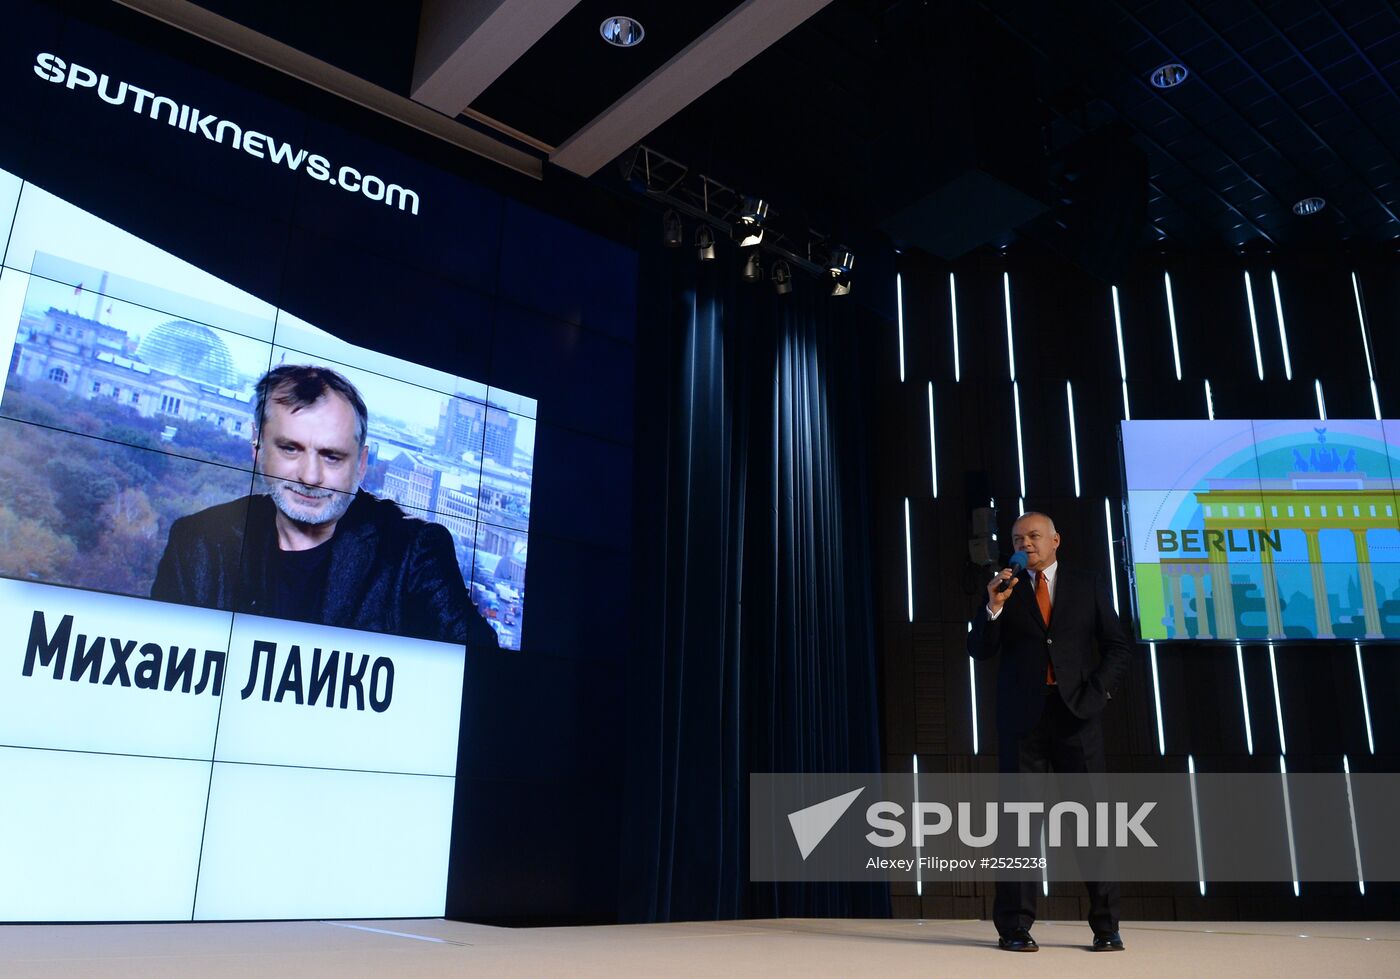 Presentation of the major international news brand, Sputnik